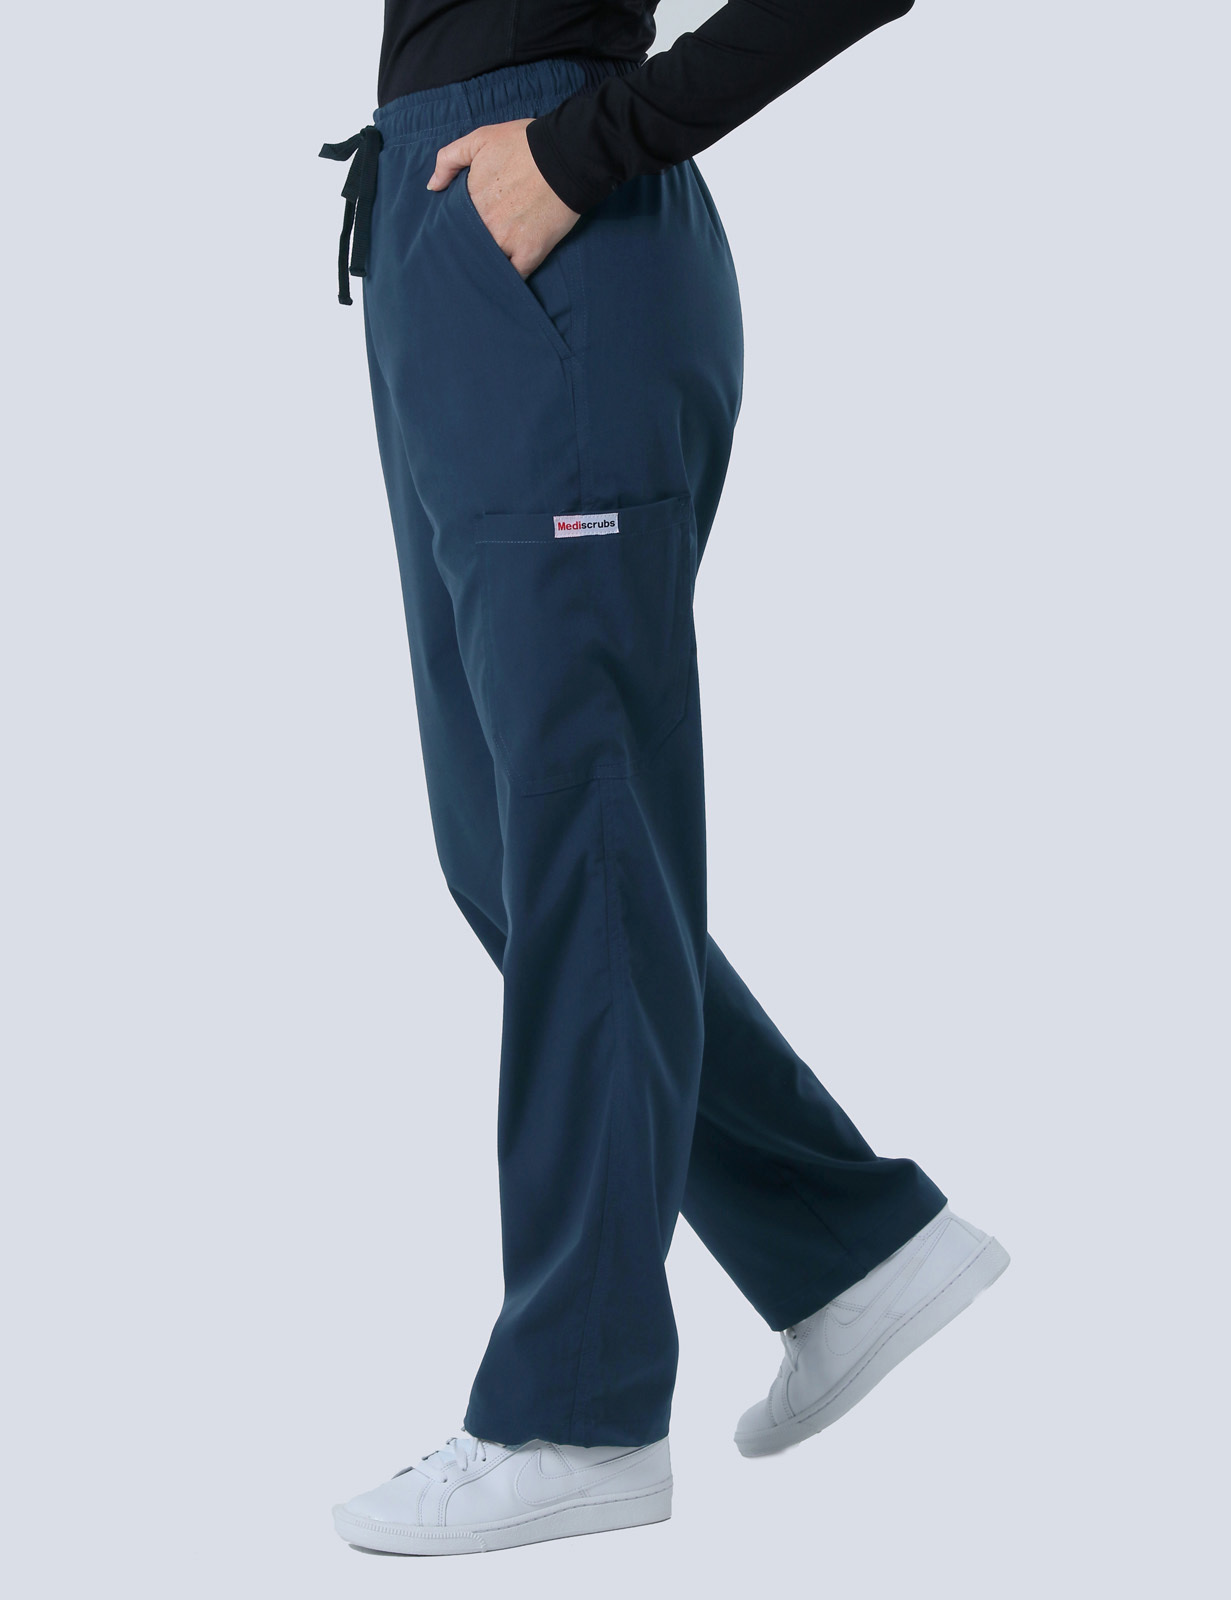 Rockhampton Hospital Clinical Nurse Uniform Set Bundle (Women's Fit Solid Top and Cargo Pants in Navy incl Logos)